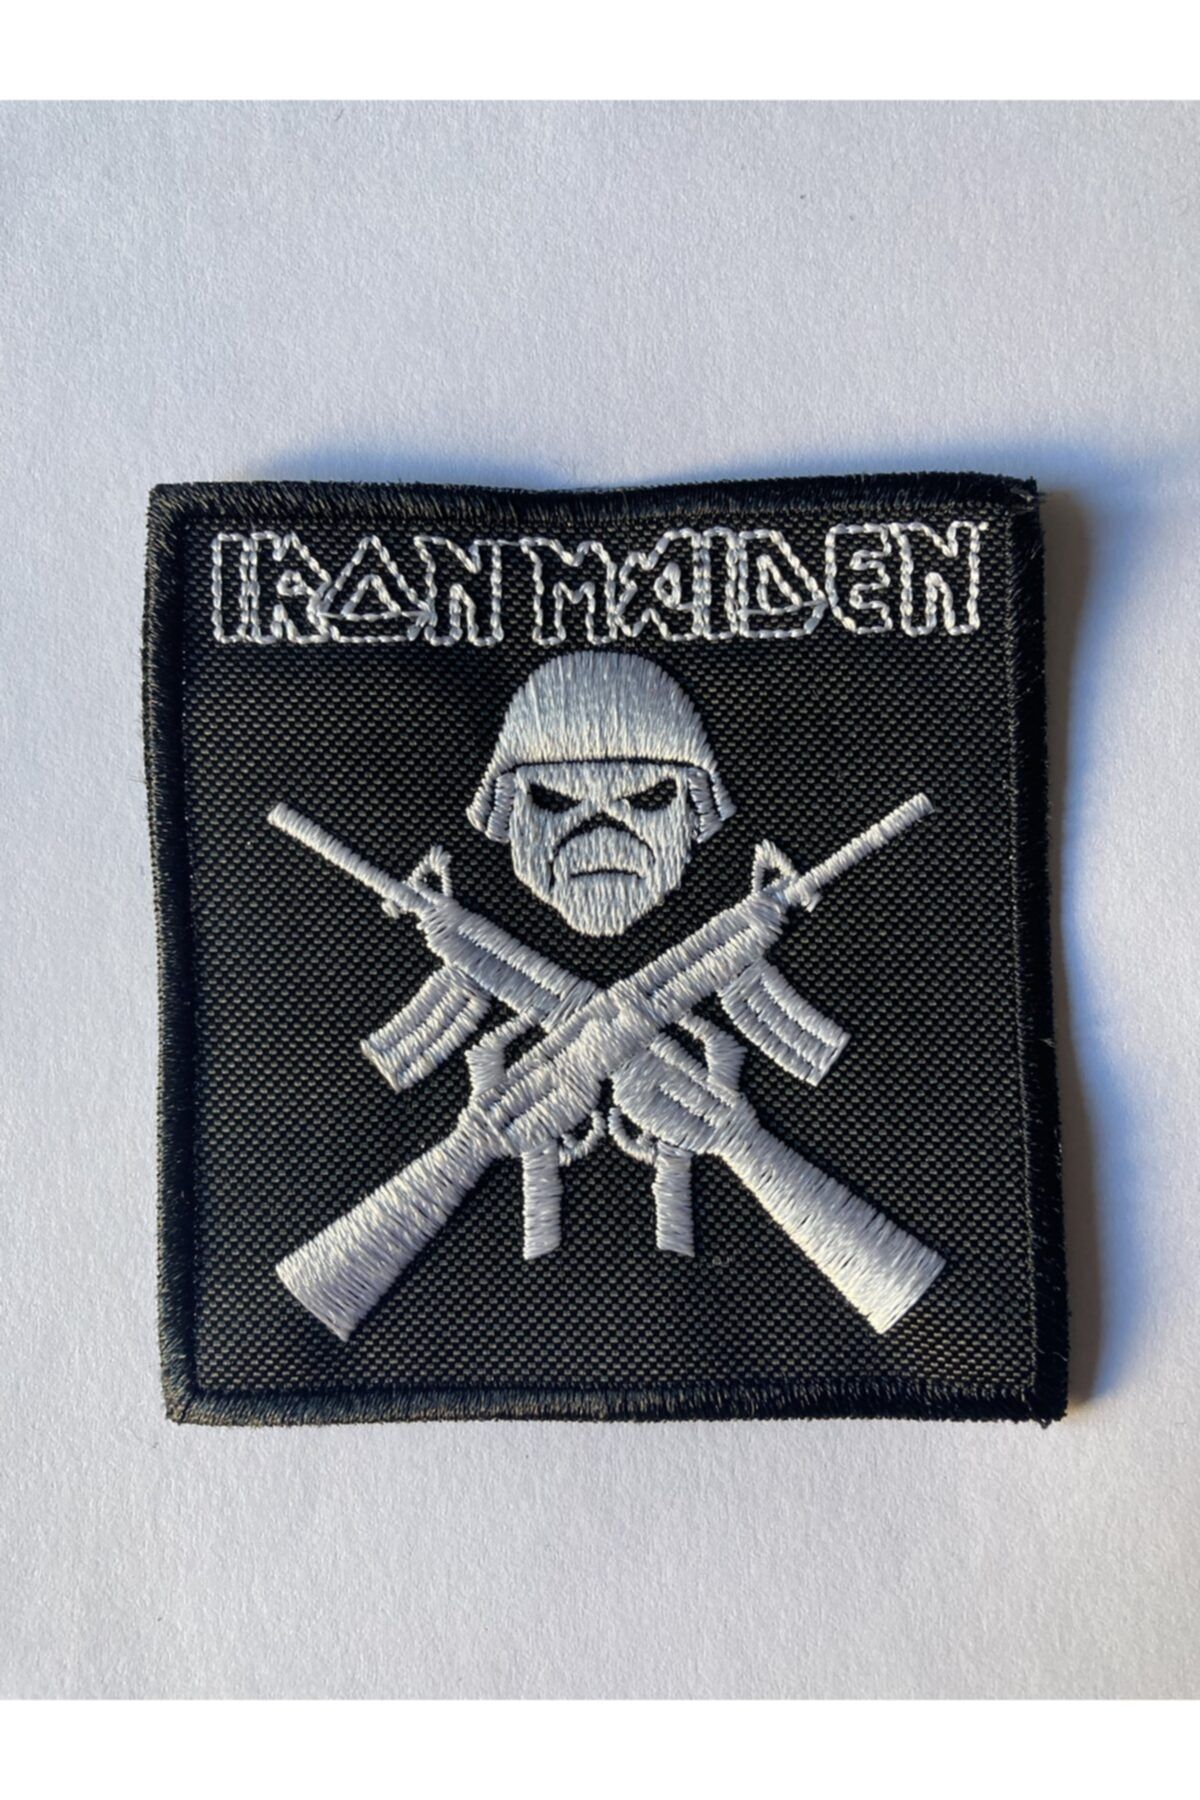 StüdyoÜmitTişört Iron Maiden A Matter Of Life And Death Patch Peç Arma ve Kot Yamaları 8 cm x 8 cm